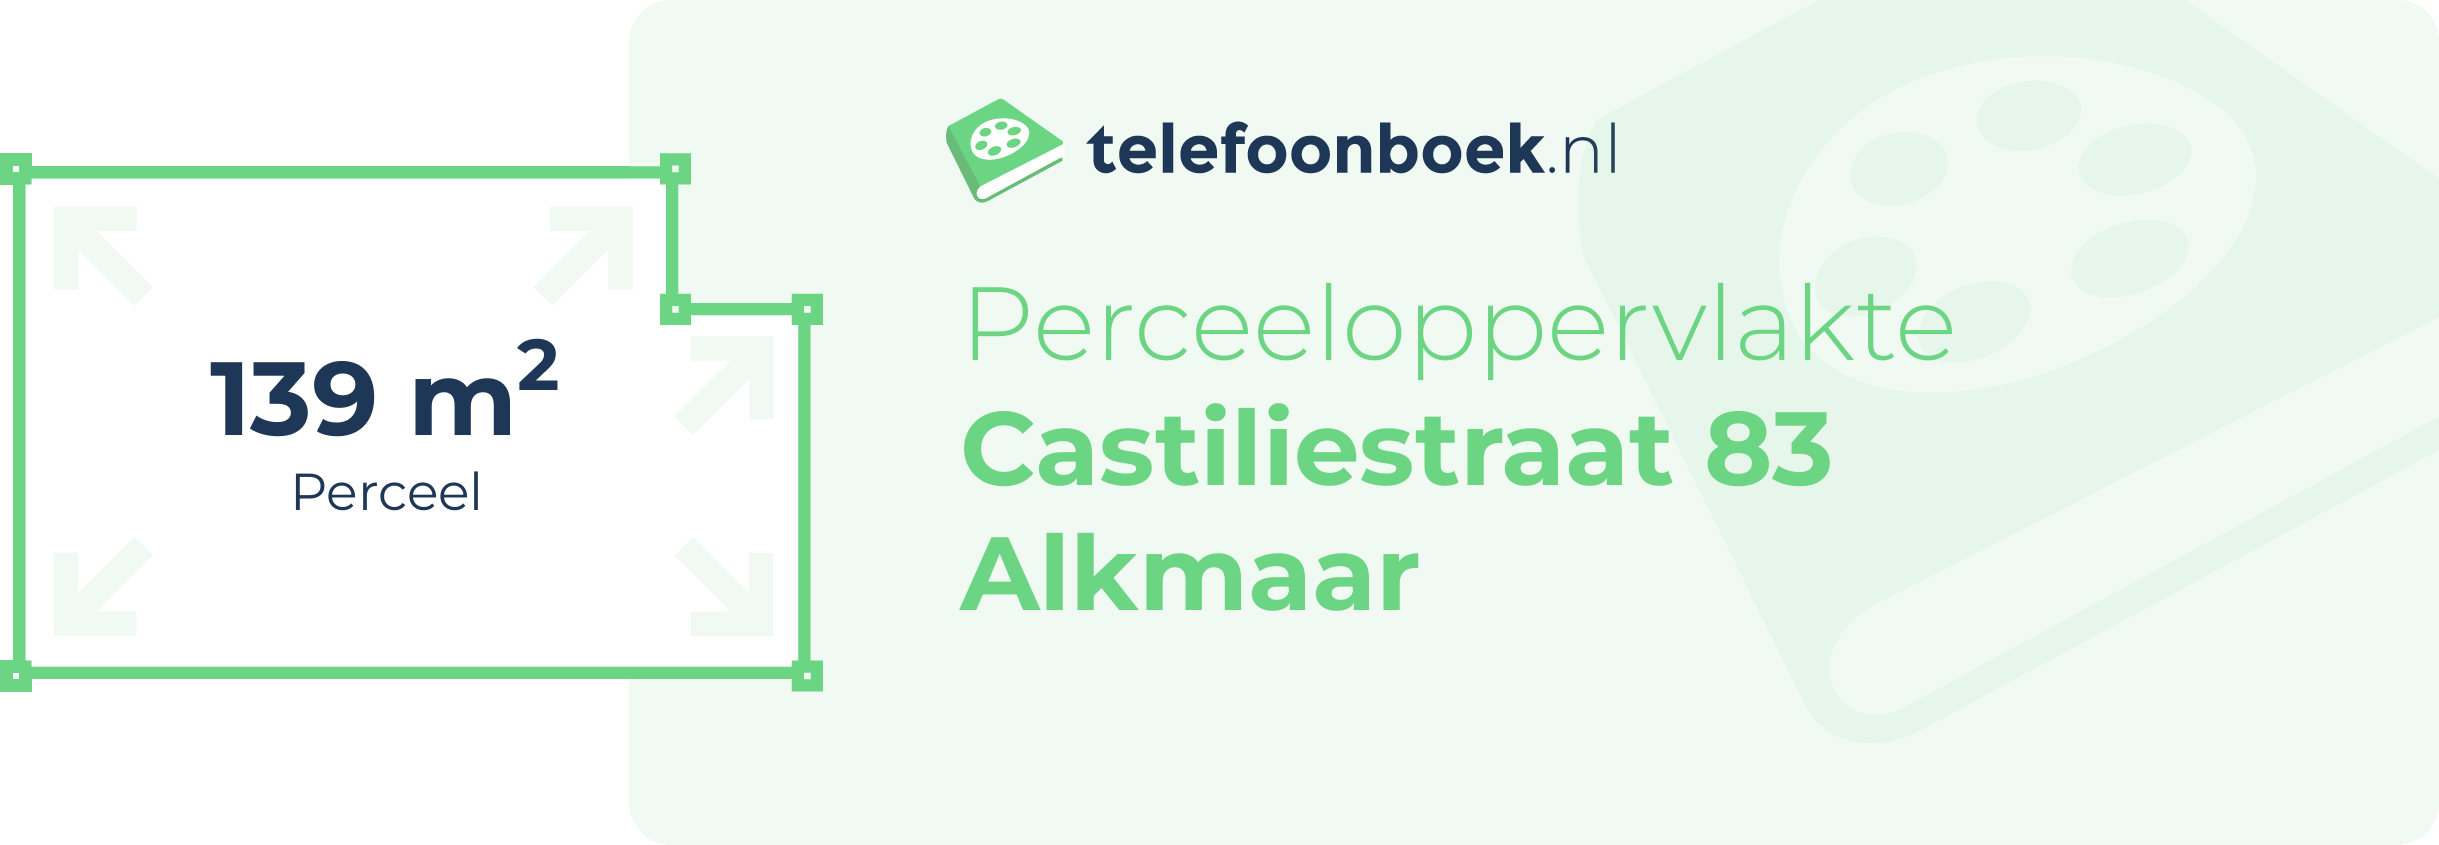 Perceeloppervlakte Castiliestraat 83 Alkmaar